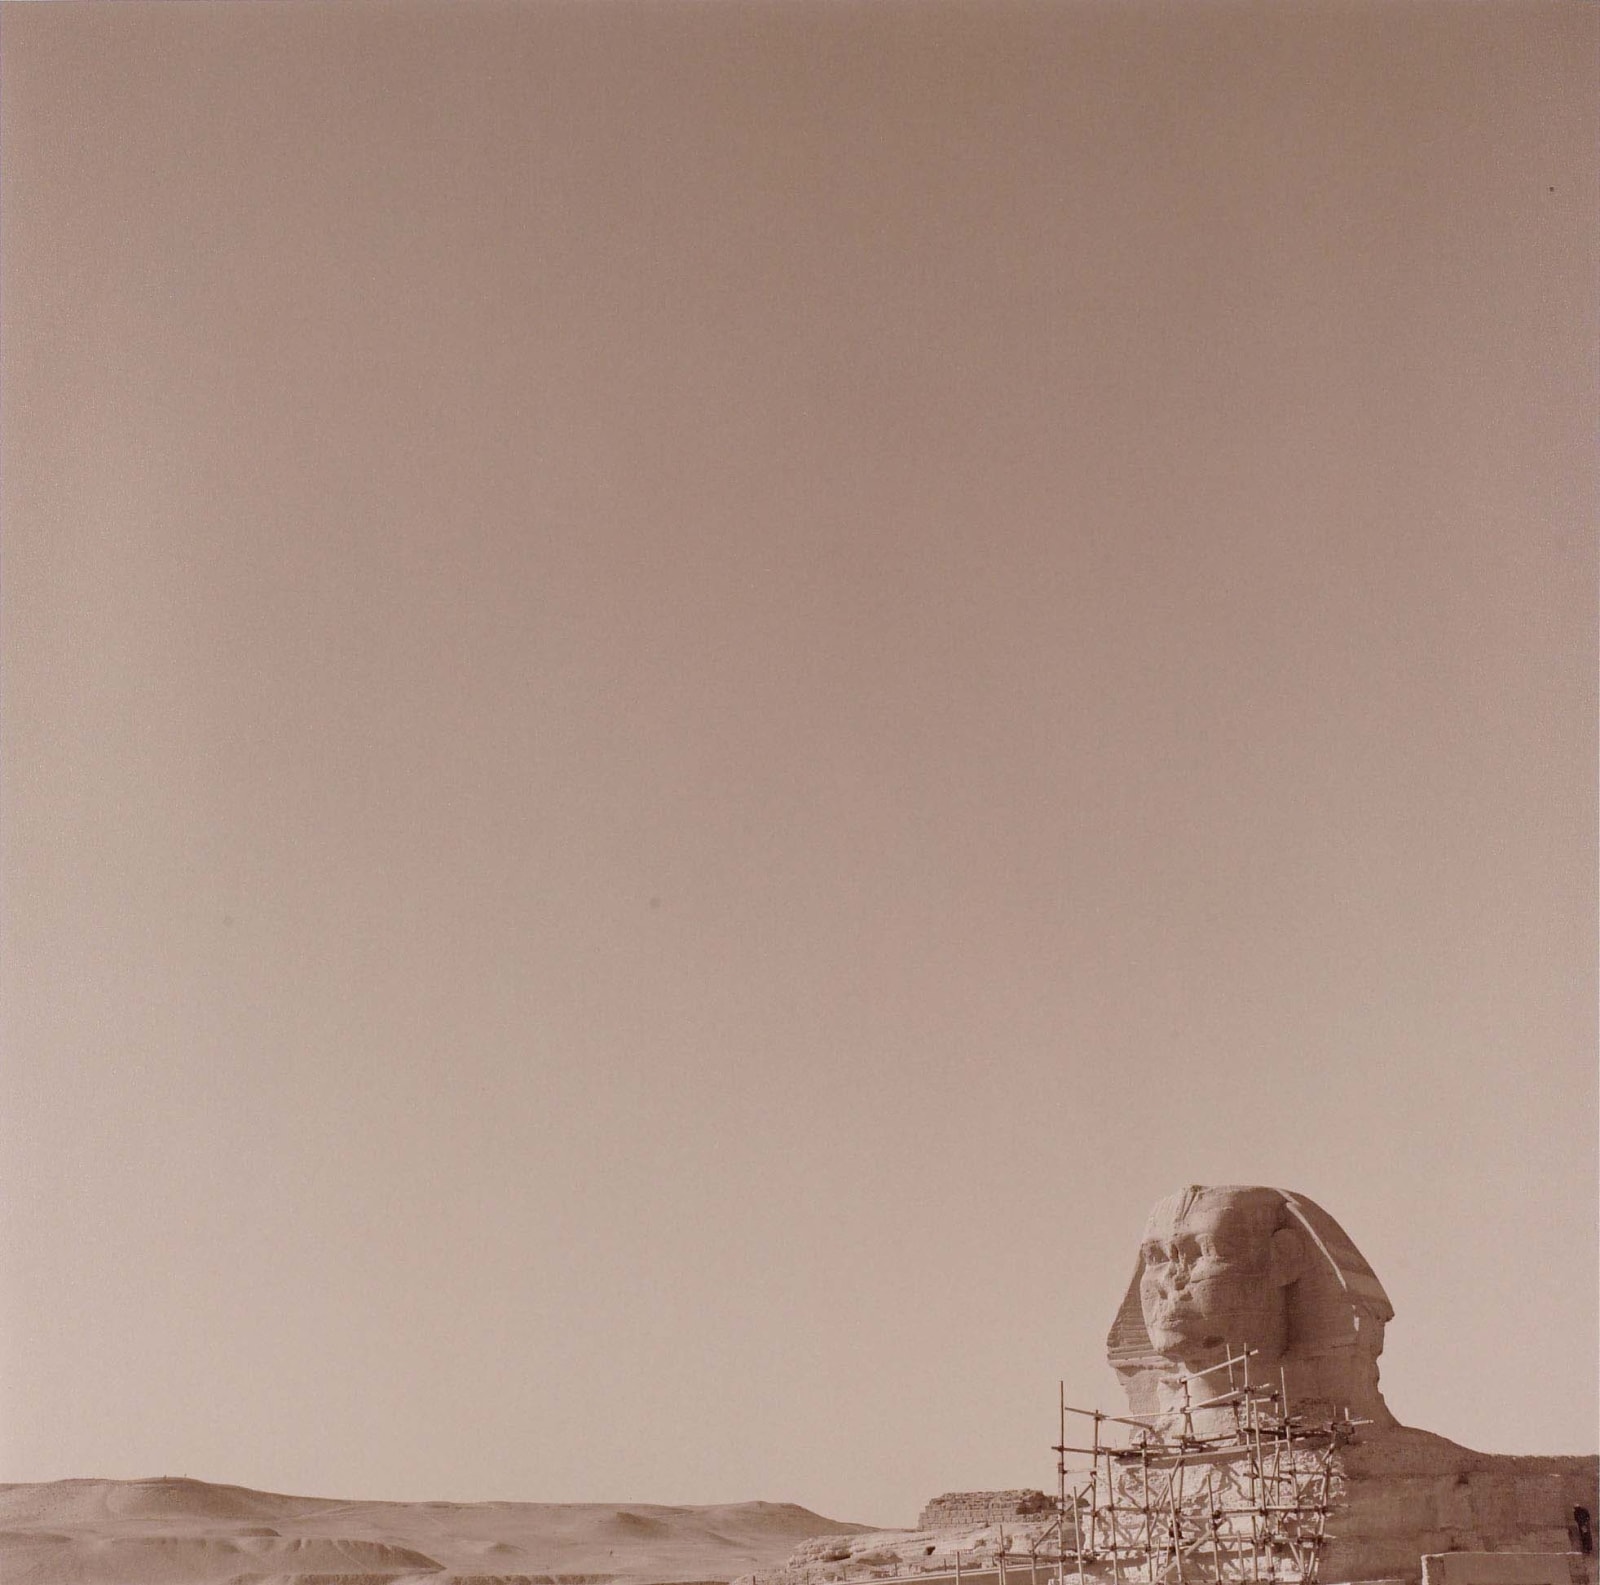 Lynn Davis photograph of Sphinx at Memphis, Egypt in lower right hand corner